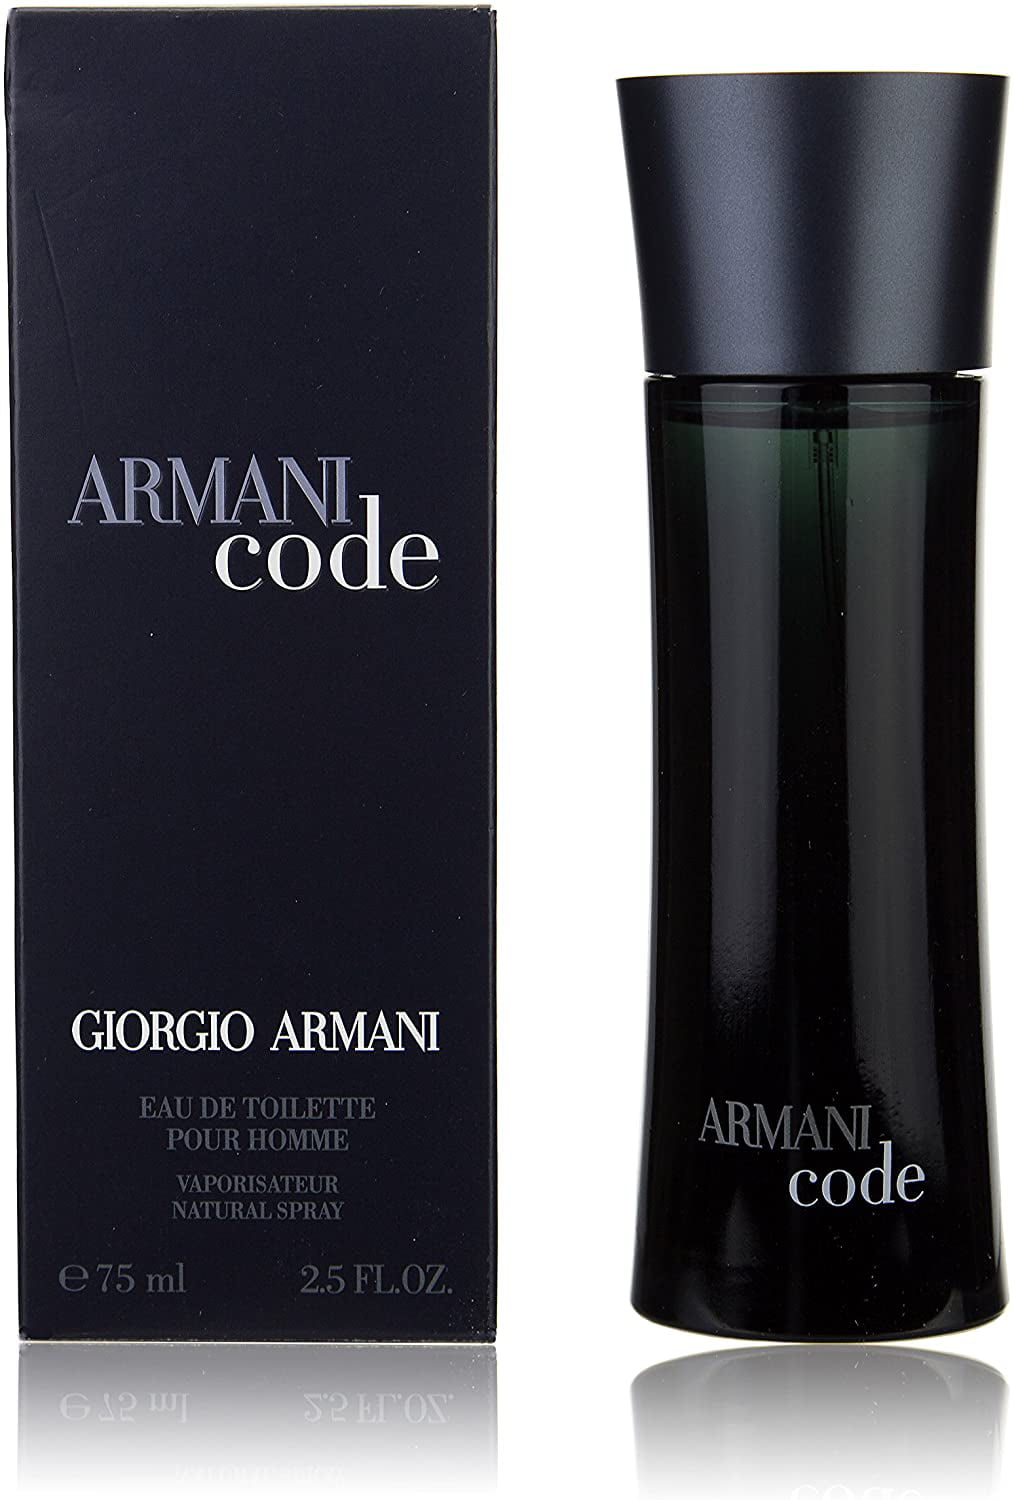 Armani code 75ml